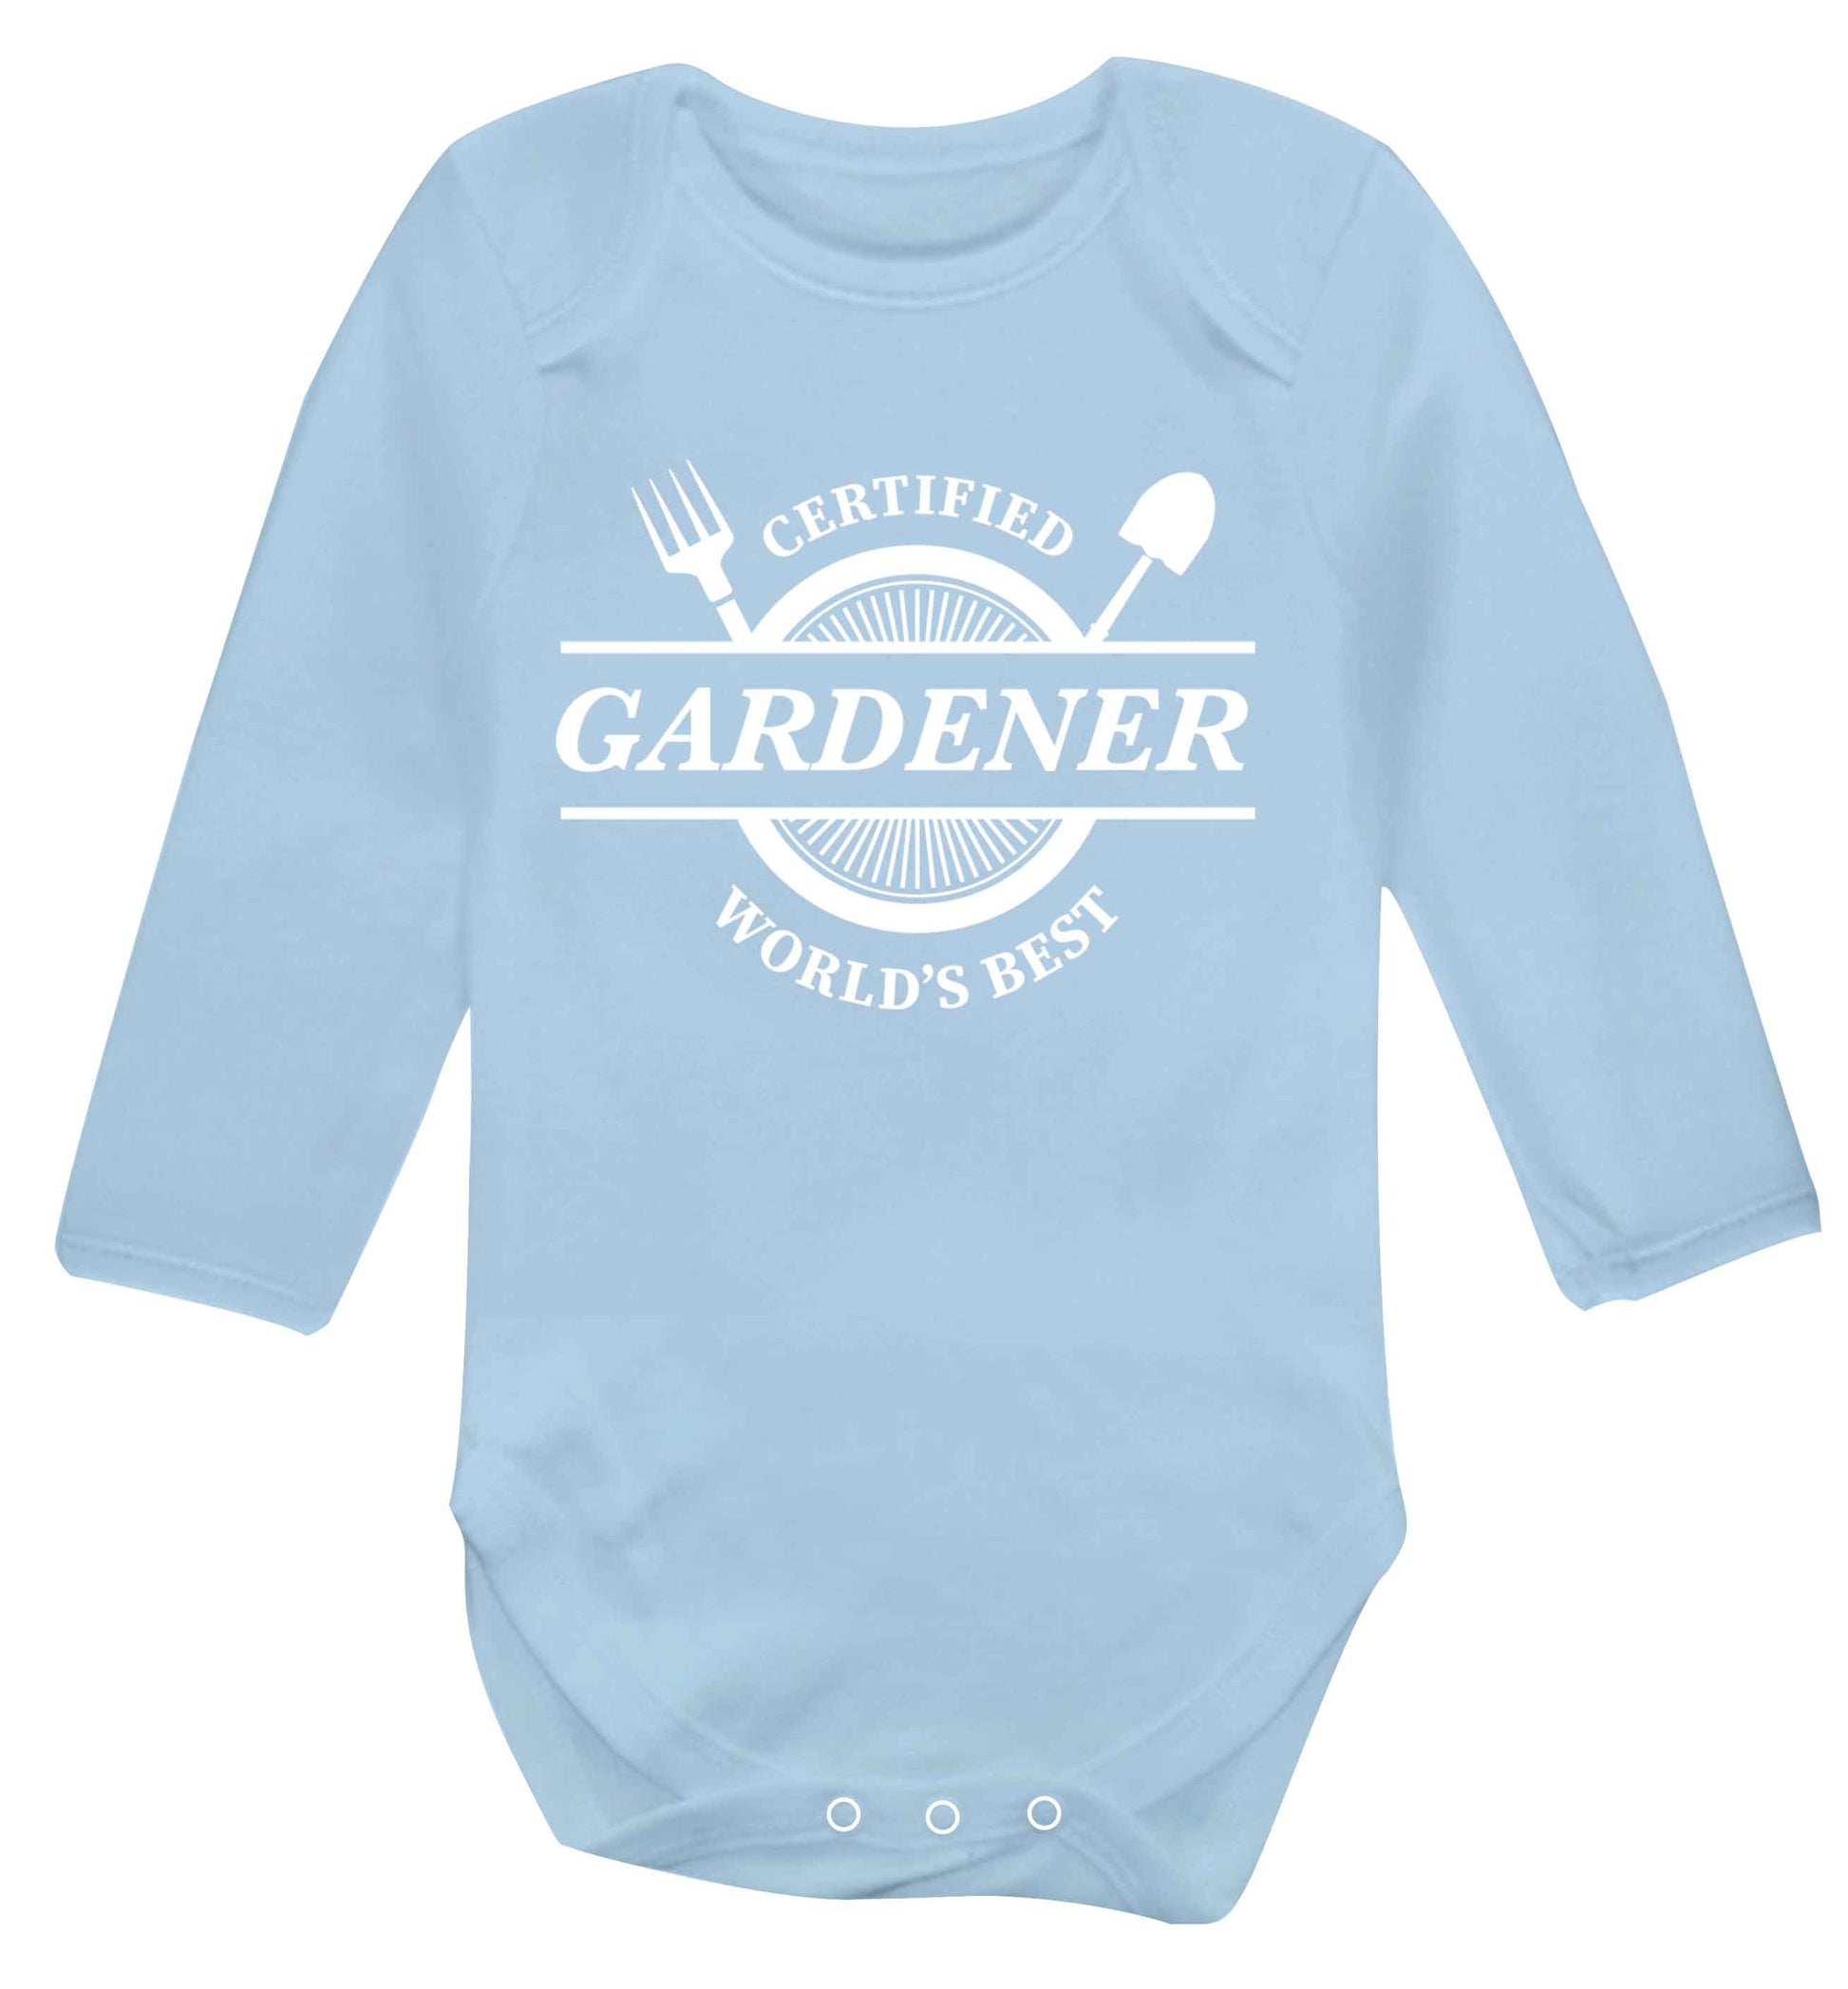 Certified gardener worlds best Baby Vest long sleeved pale blue 6-12 months